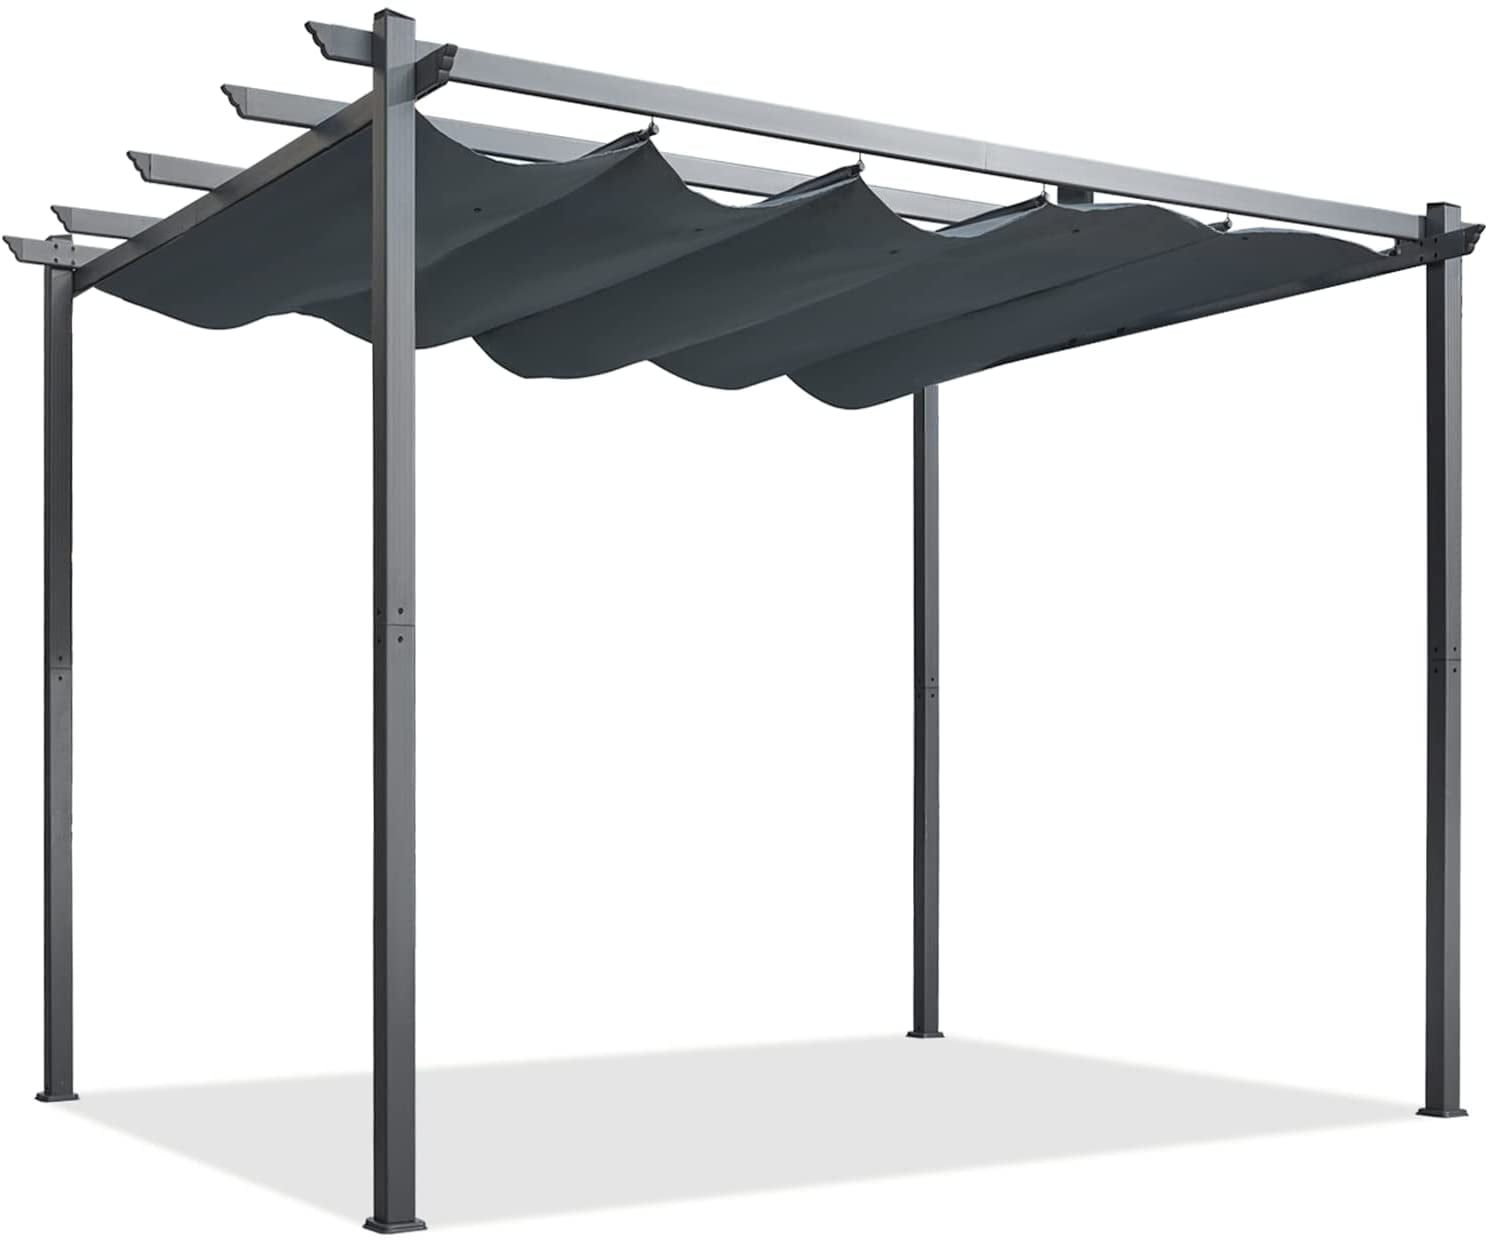 Afkorten ring Mevrouw Mellcom 10'x10' Outdoor Patio Pergola with Retractable Canopy - Walmart.com